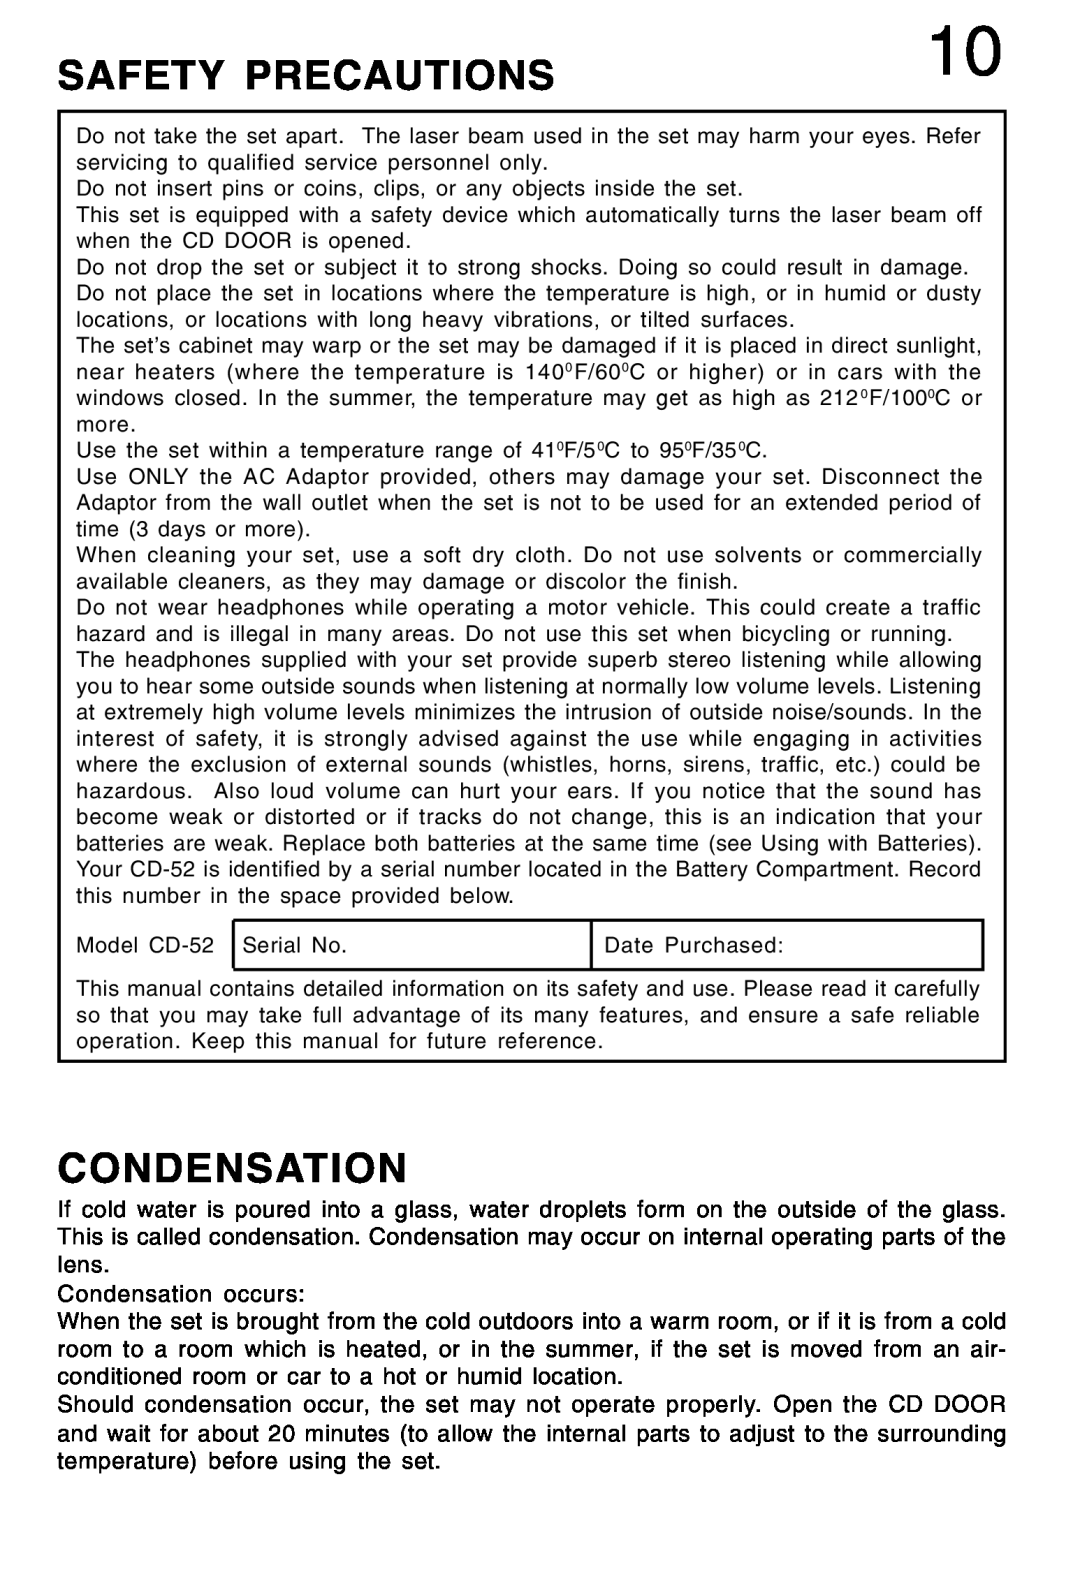 Lenoxx Electronics CD-52 manual Safety Precautions, Condensation 